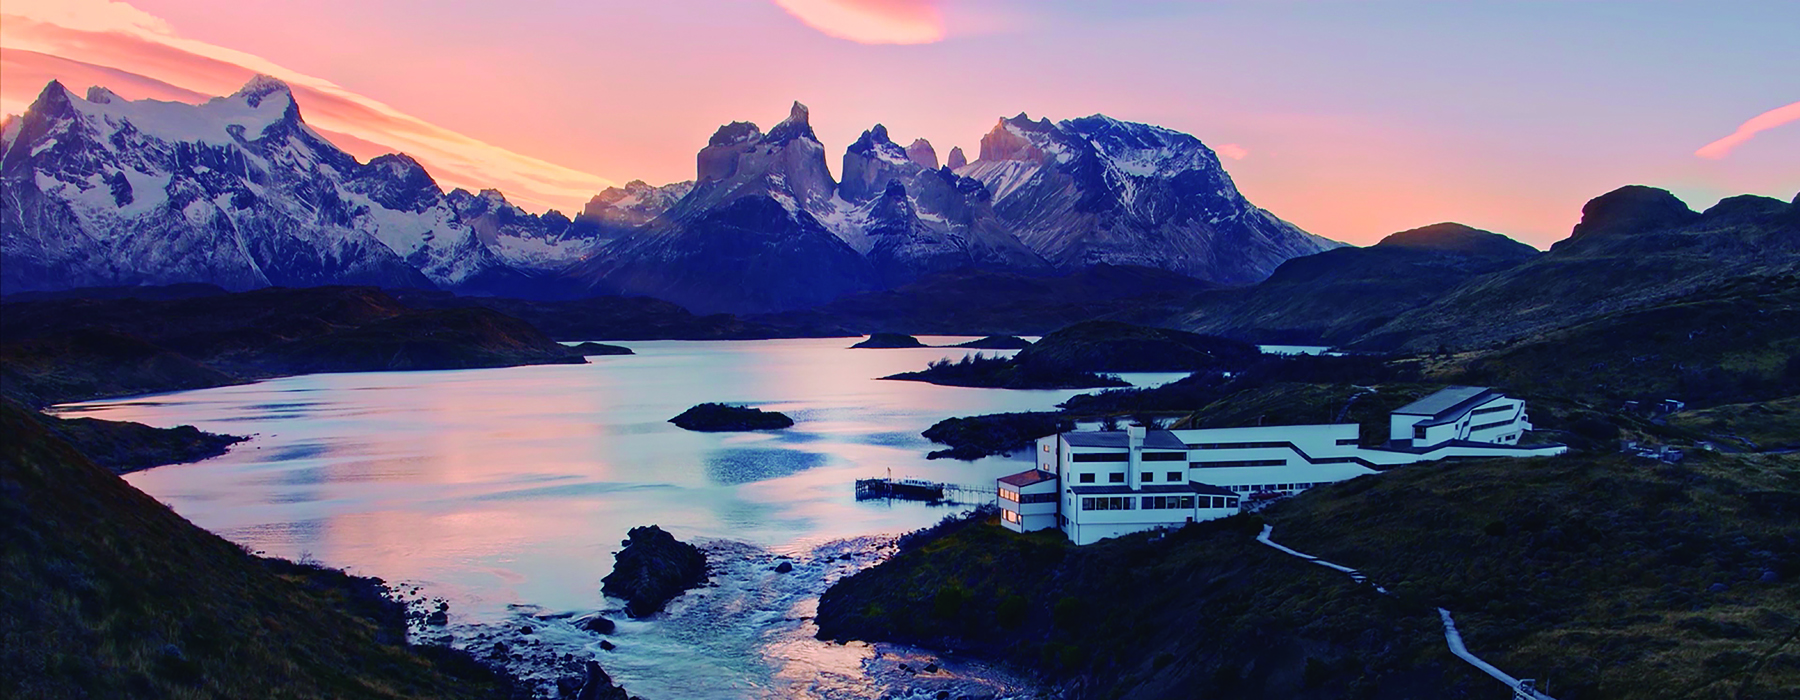 Sunset, Explora Patagonia Lodge, Patagonia, Chile - Atelier South America